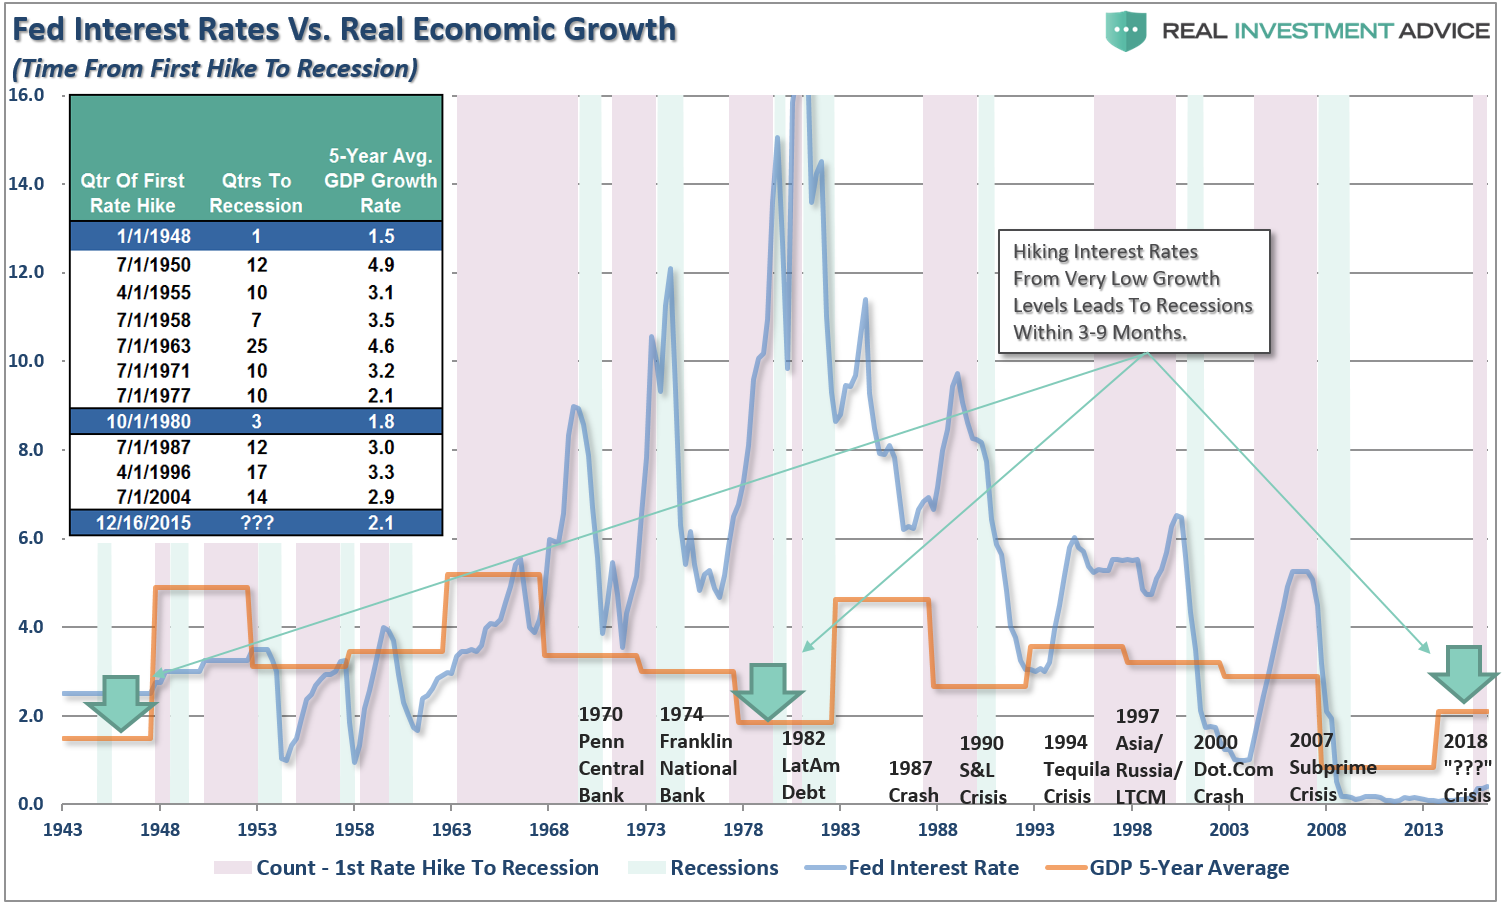 Fed Interest Rage vs Real Economic Growth 1943-2017